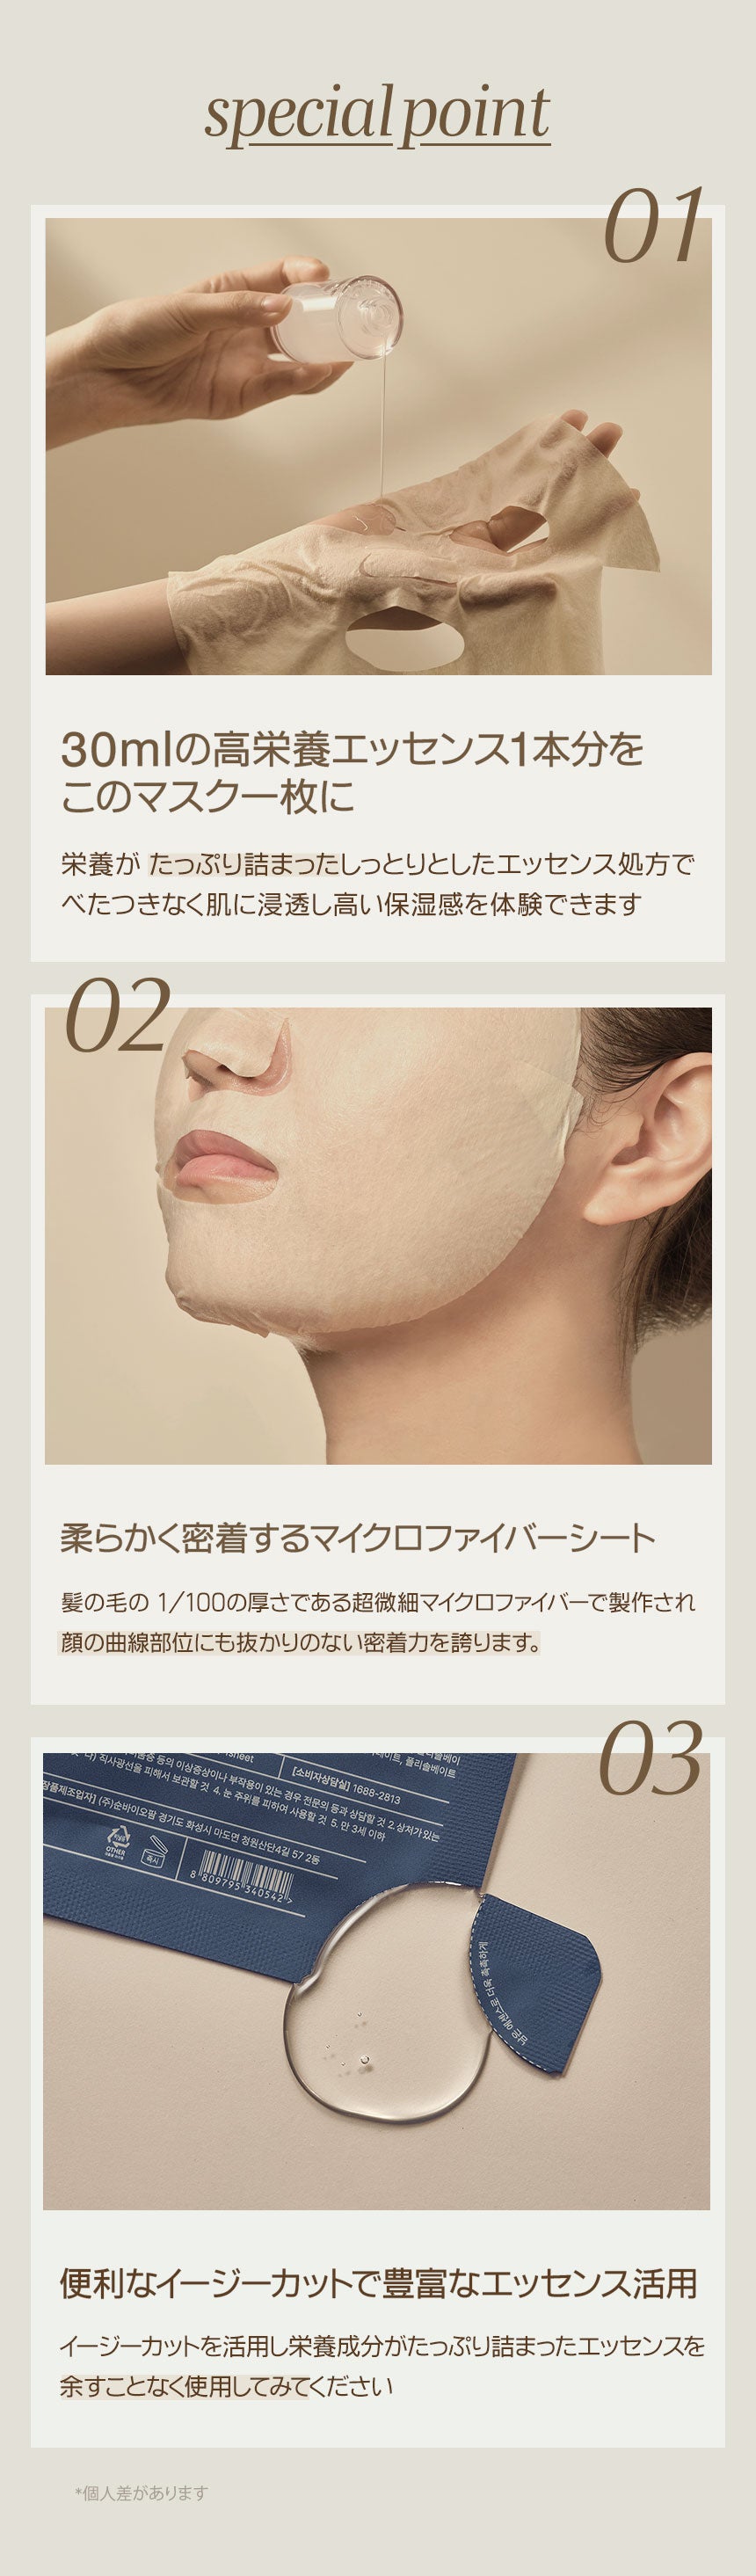 equlib(イクリブ) : オ ブリエ フェイスマスク 1箱 (30ml×5枚入り) eau briller facial mask マスクパック EGF10